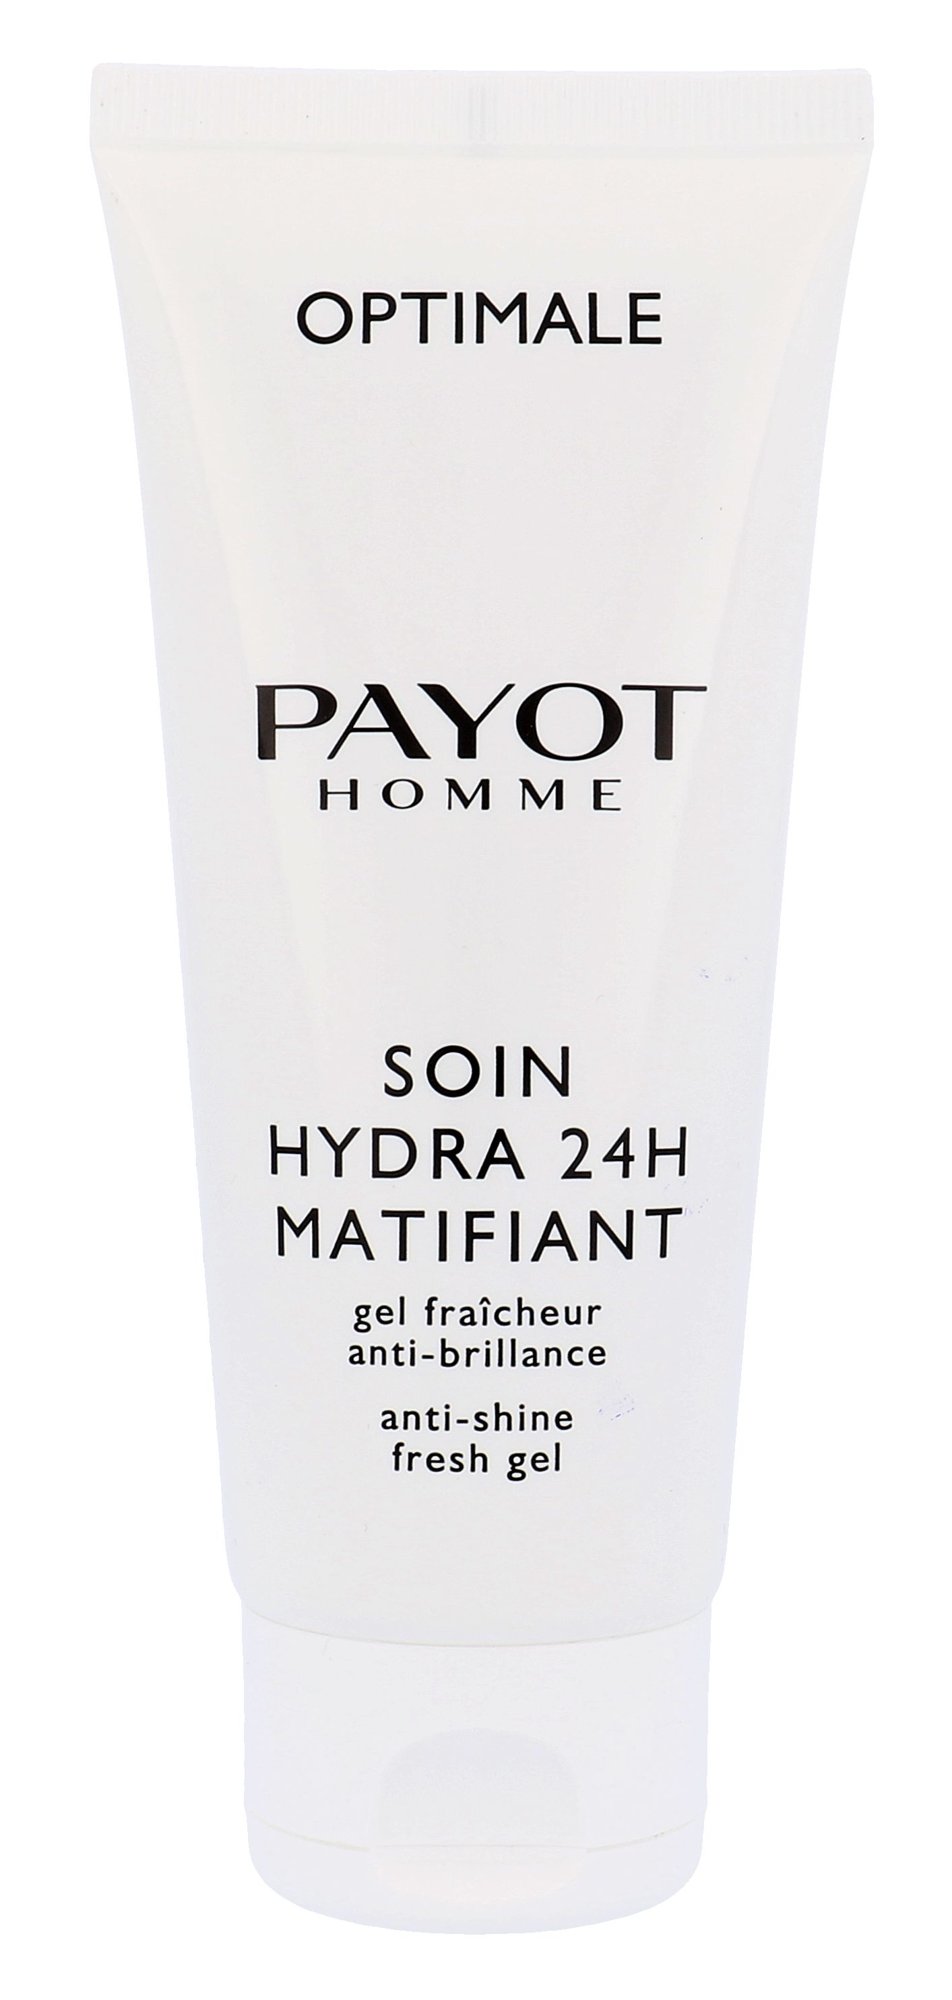 Payot Homme Optimale Anti-Shine Fresh Gel